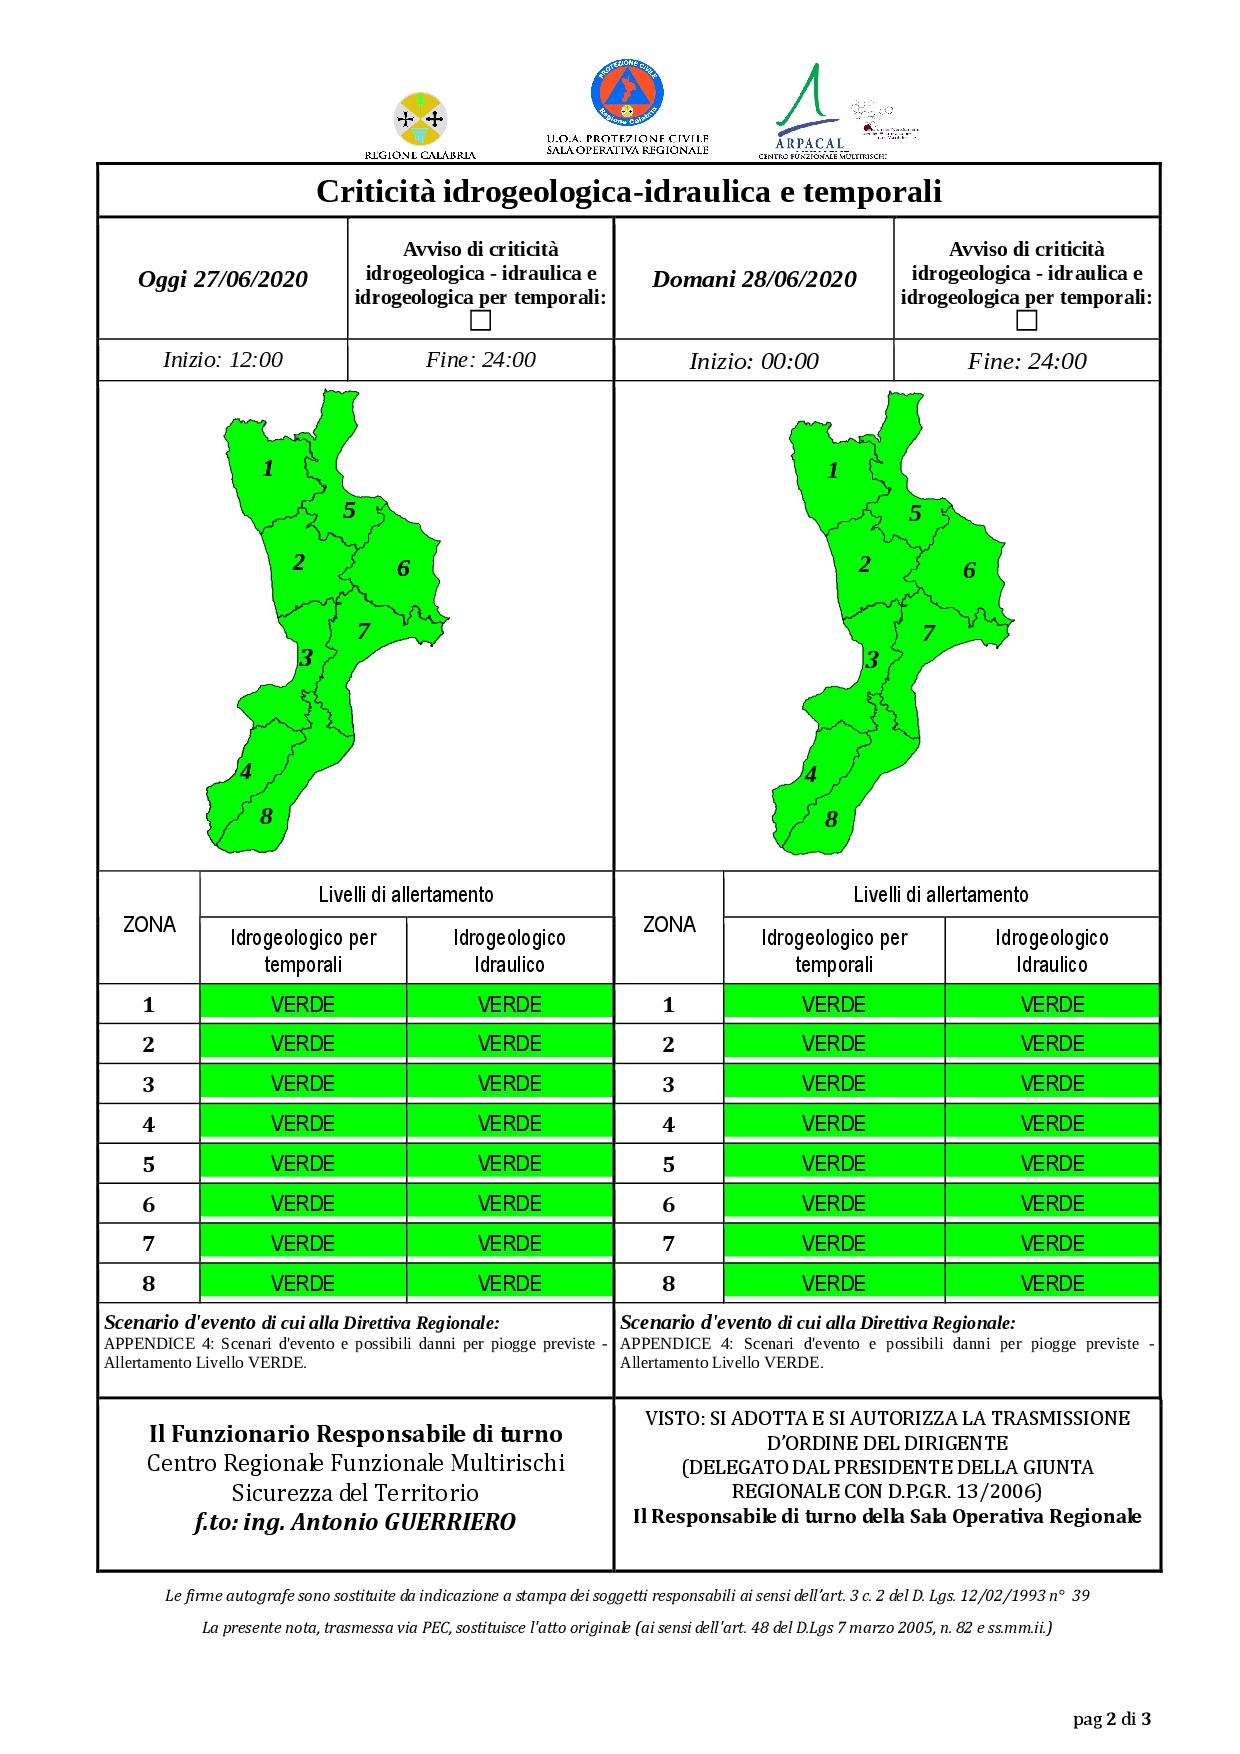 Criticità idrogeologica-idraulica e temporali in Calabria 27-06-2020